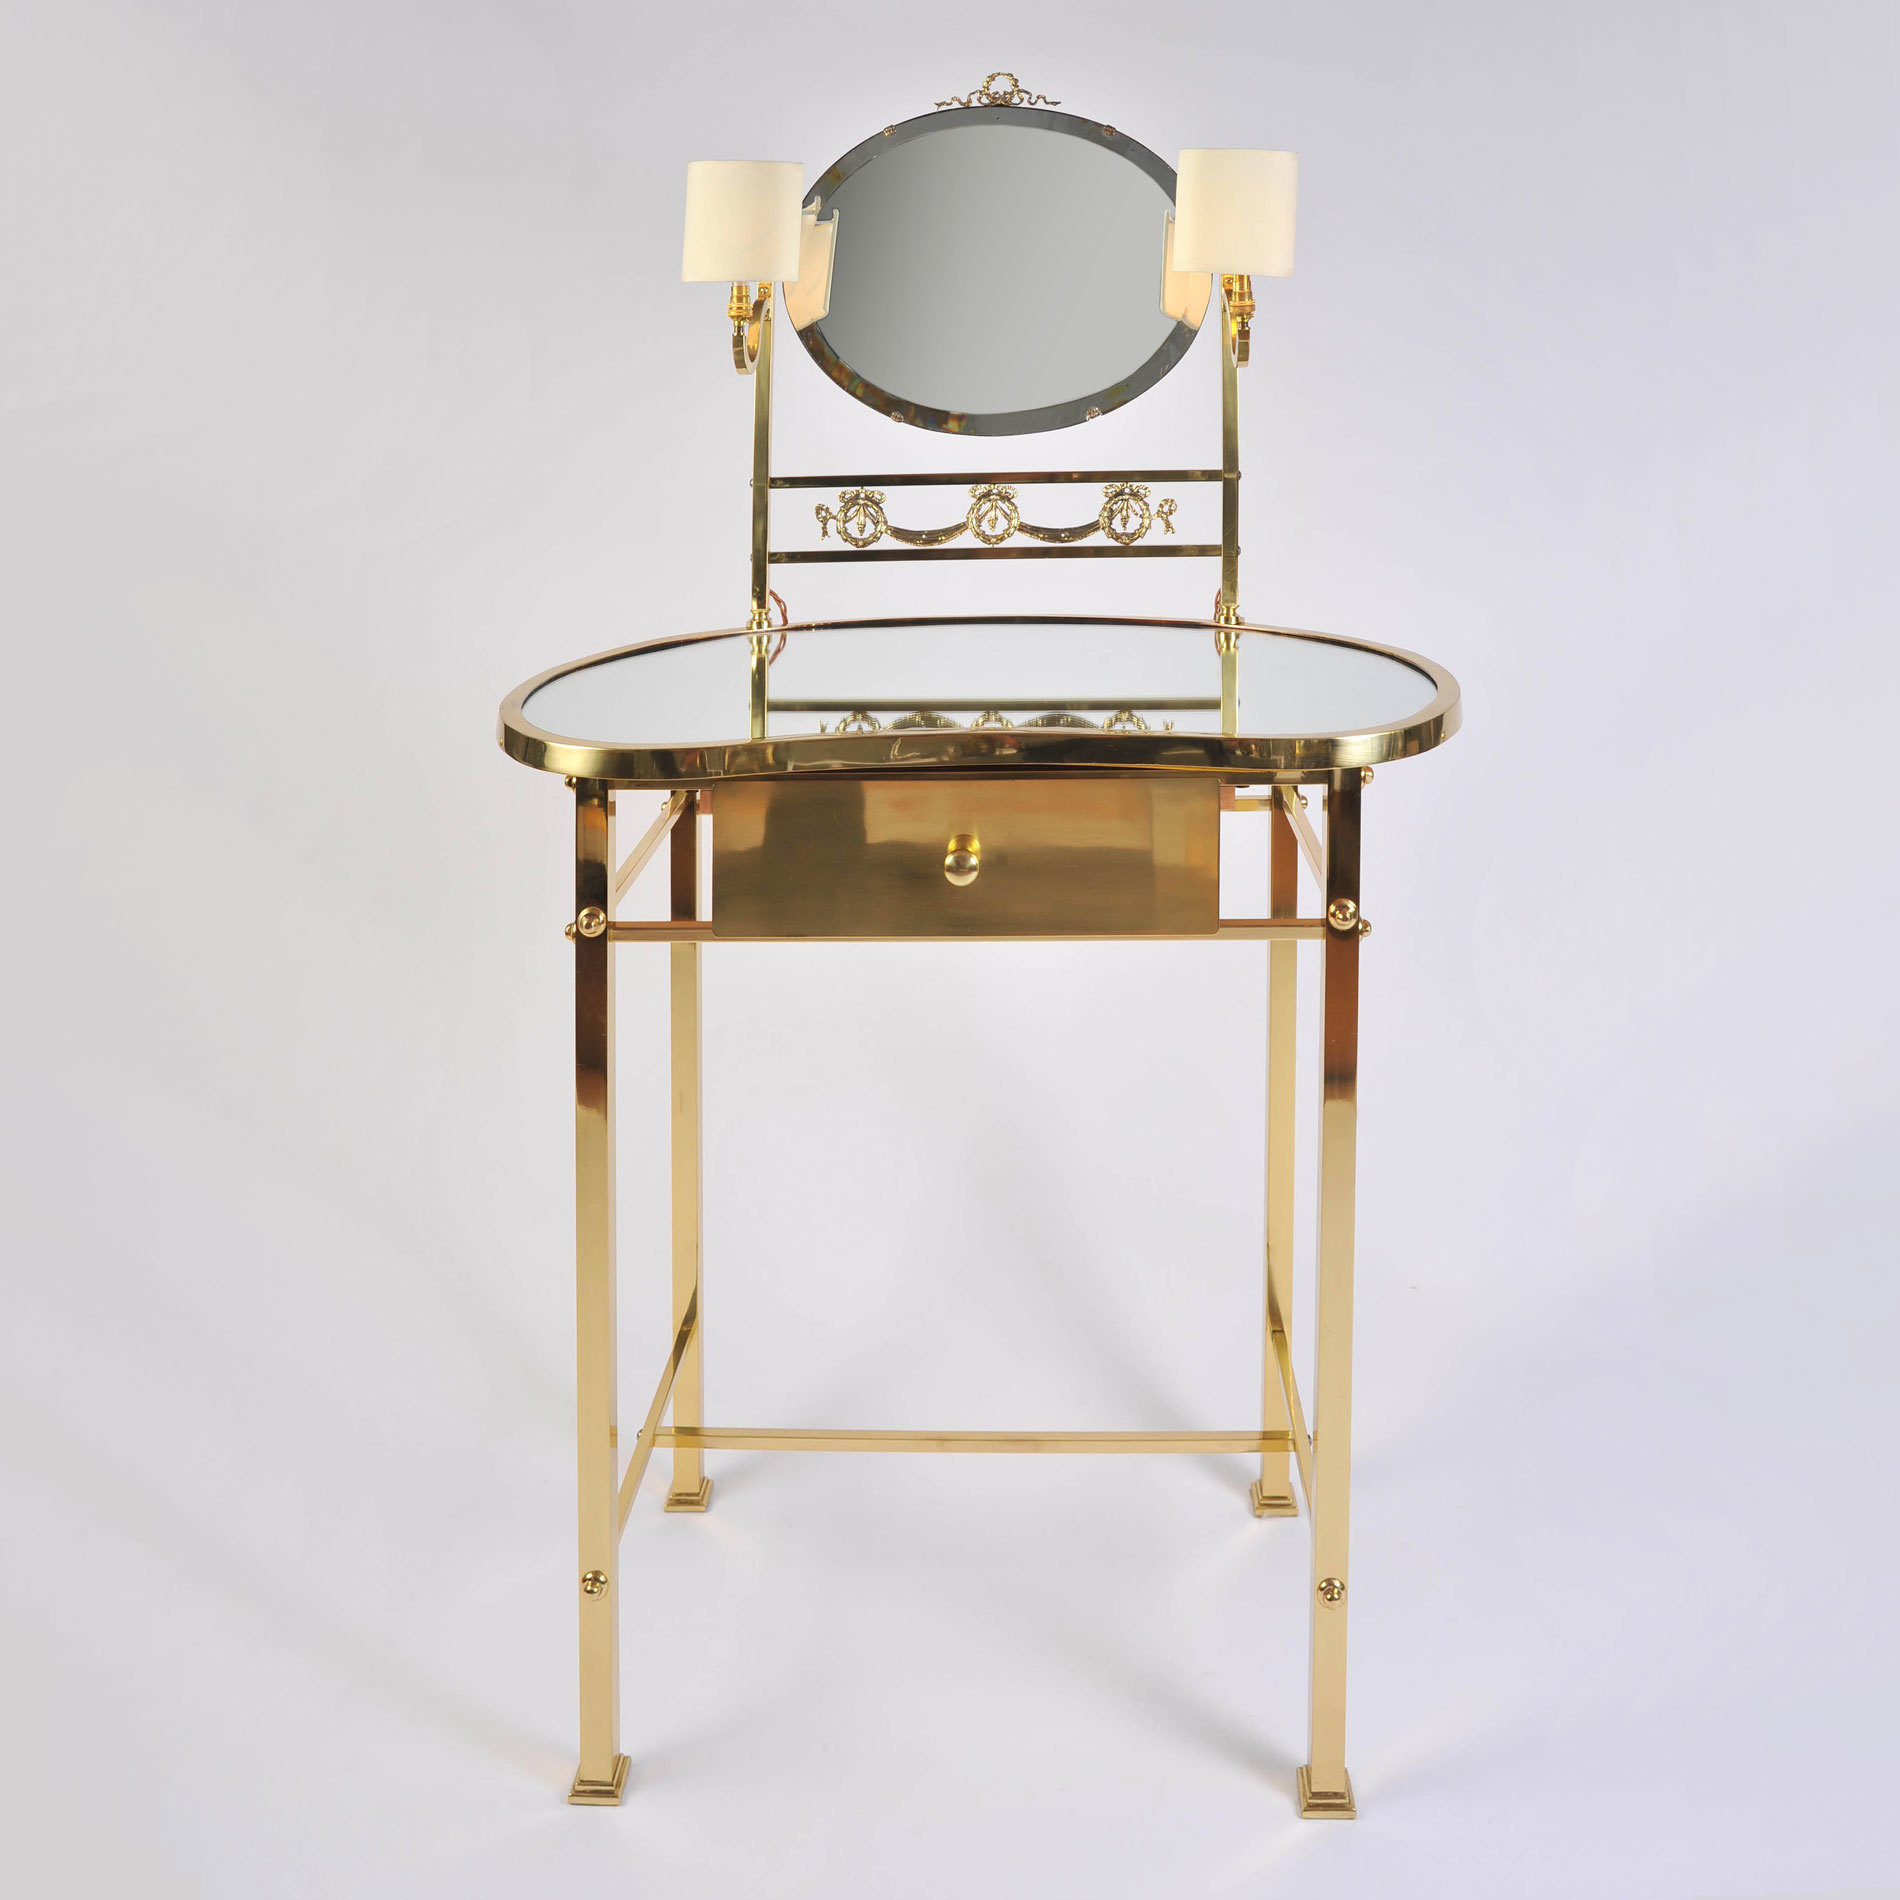 1950s Italian brass dressing-table